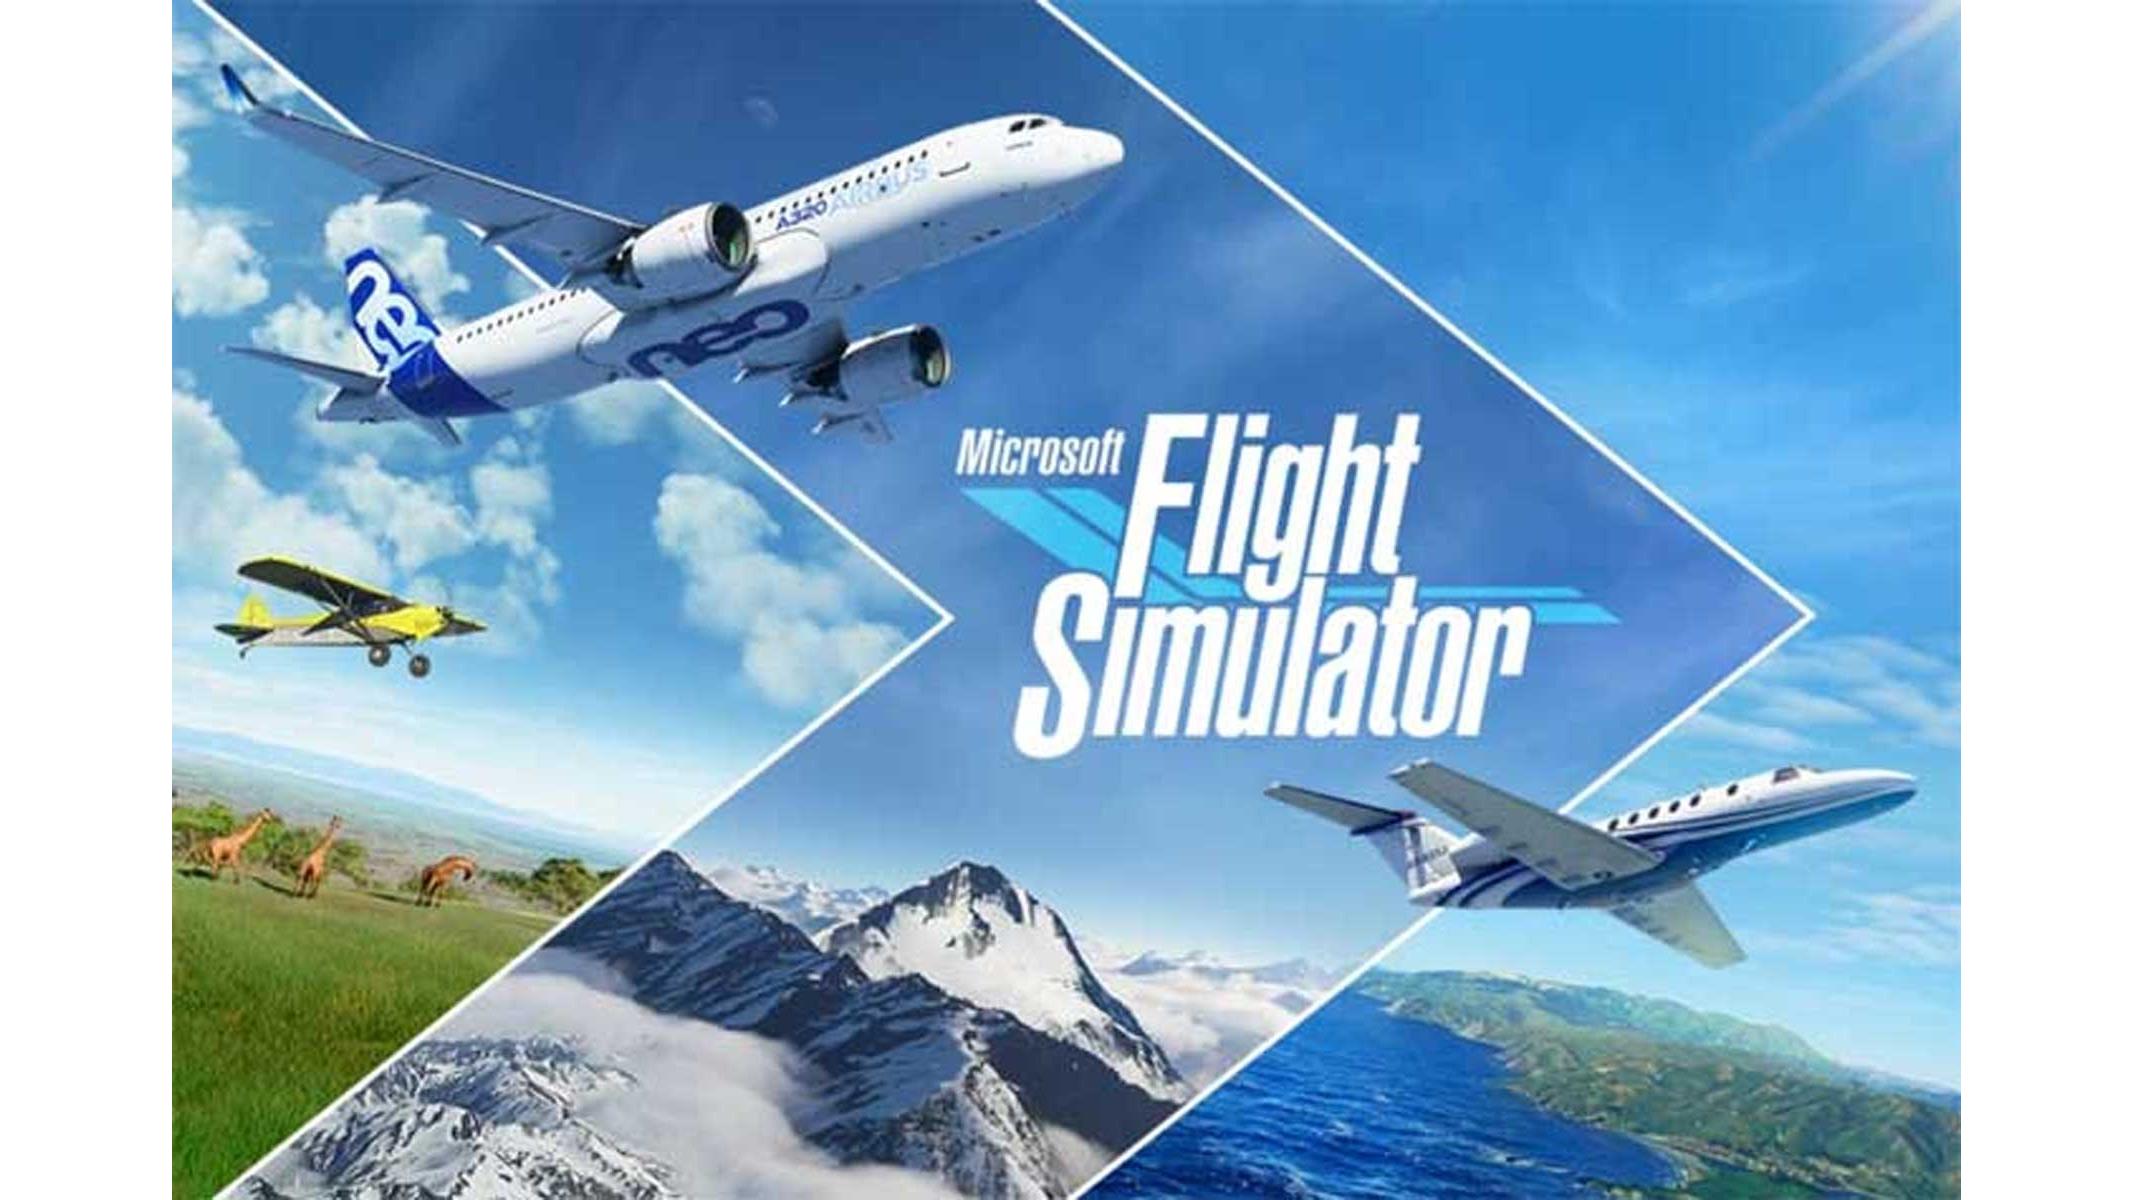 Microsoft flight simulator 2020 MSFS 2020